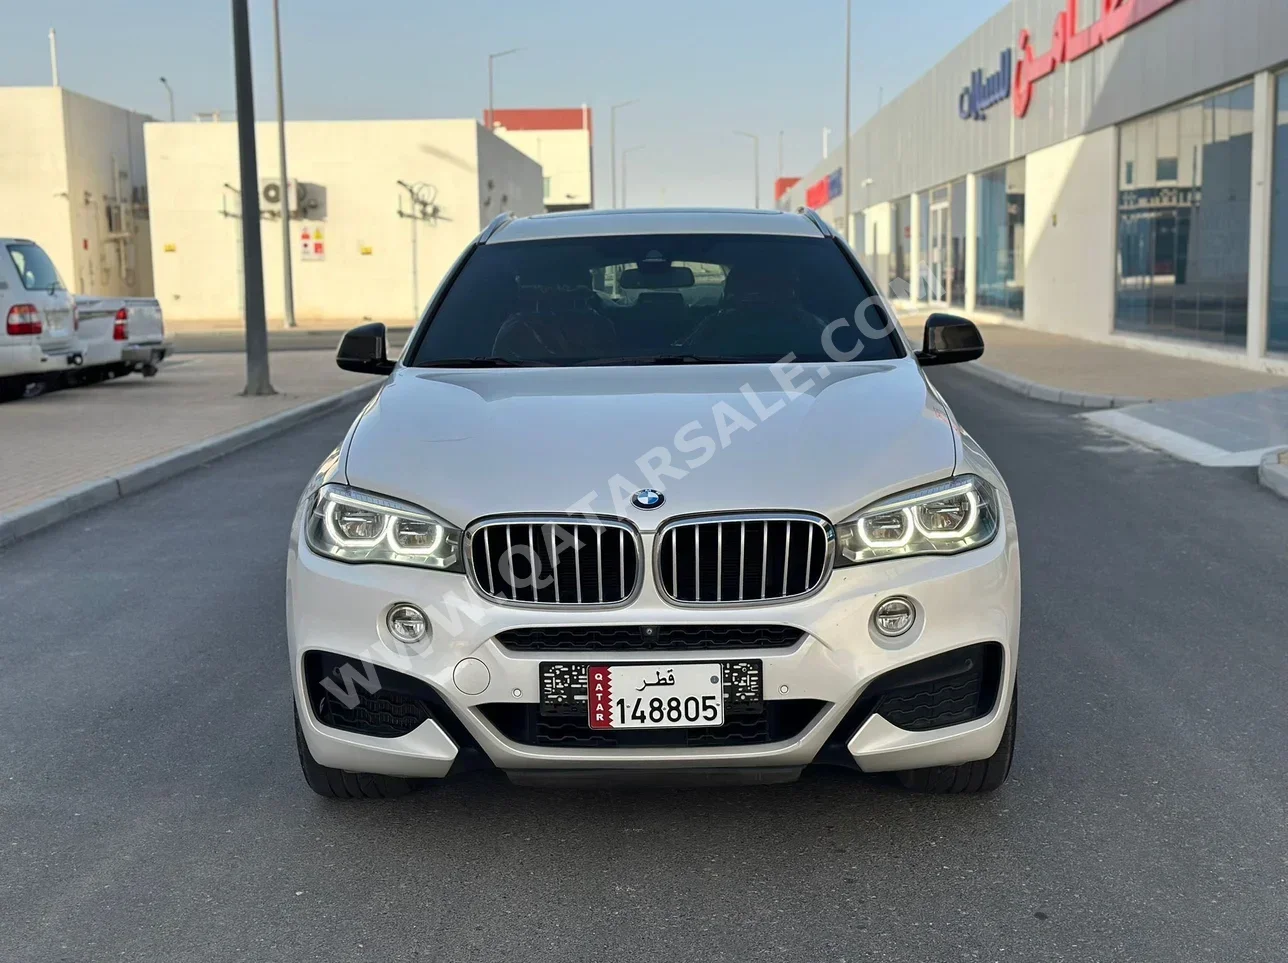 BMW  X-Series  X6  2017  Automatic  149,000 Km  8 Cylinder  Four Wheel Drive (4WD)  SUV  White